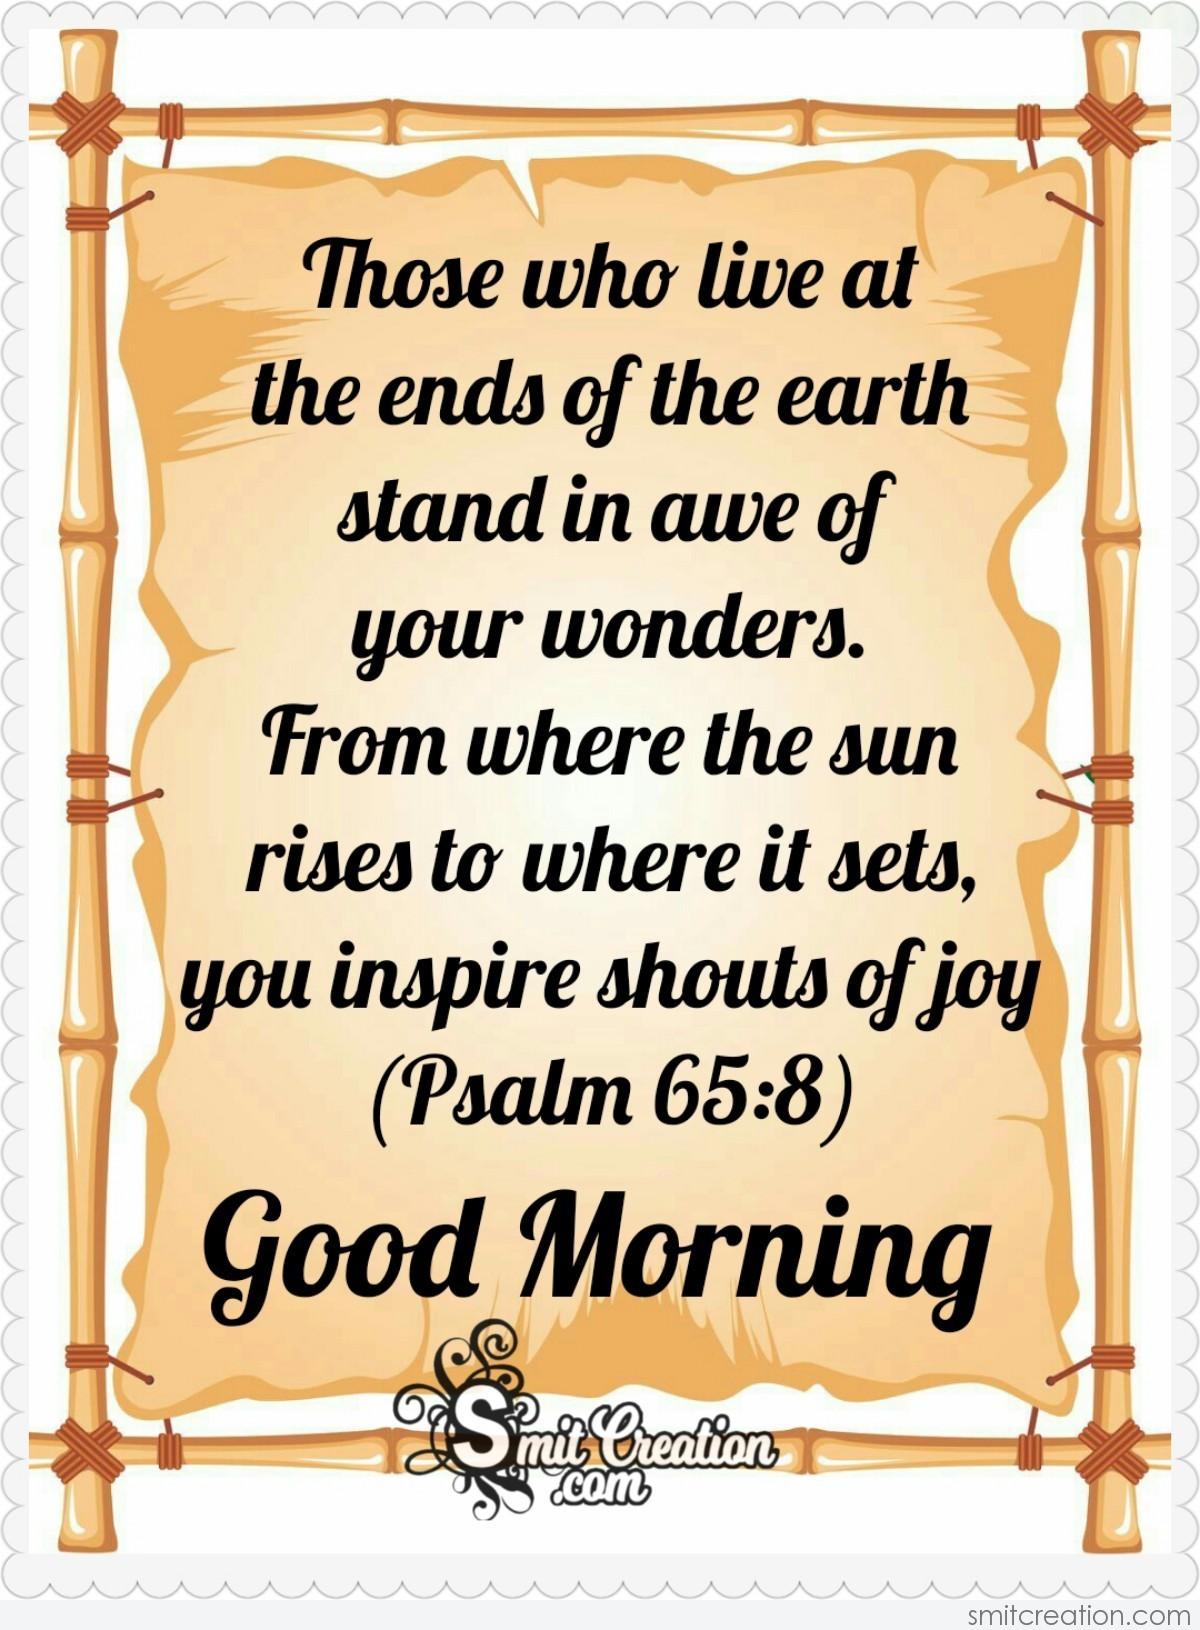 Good morning bible verse images